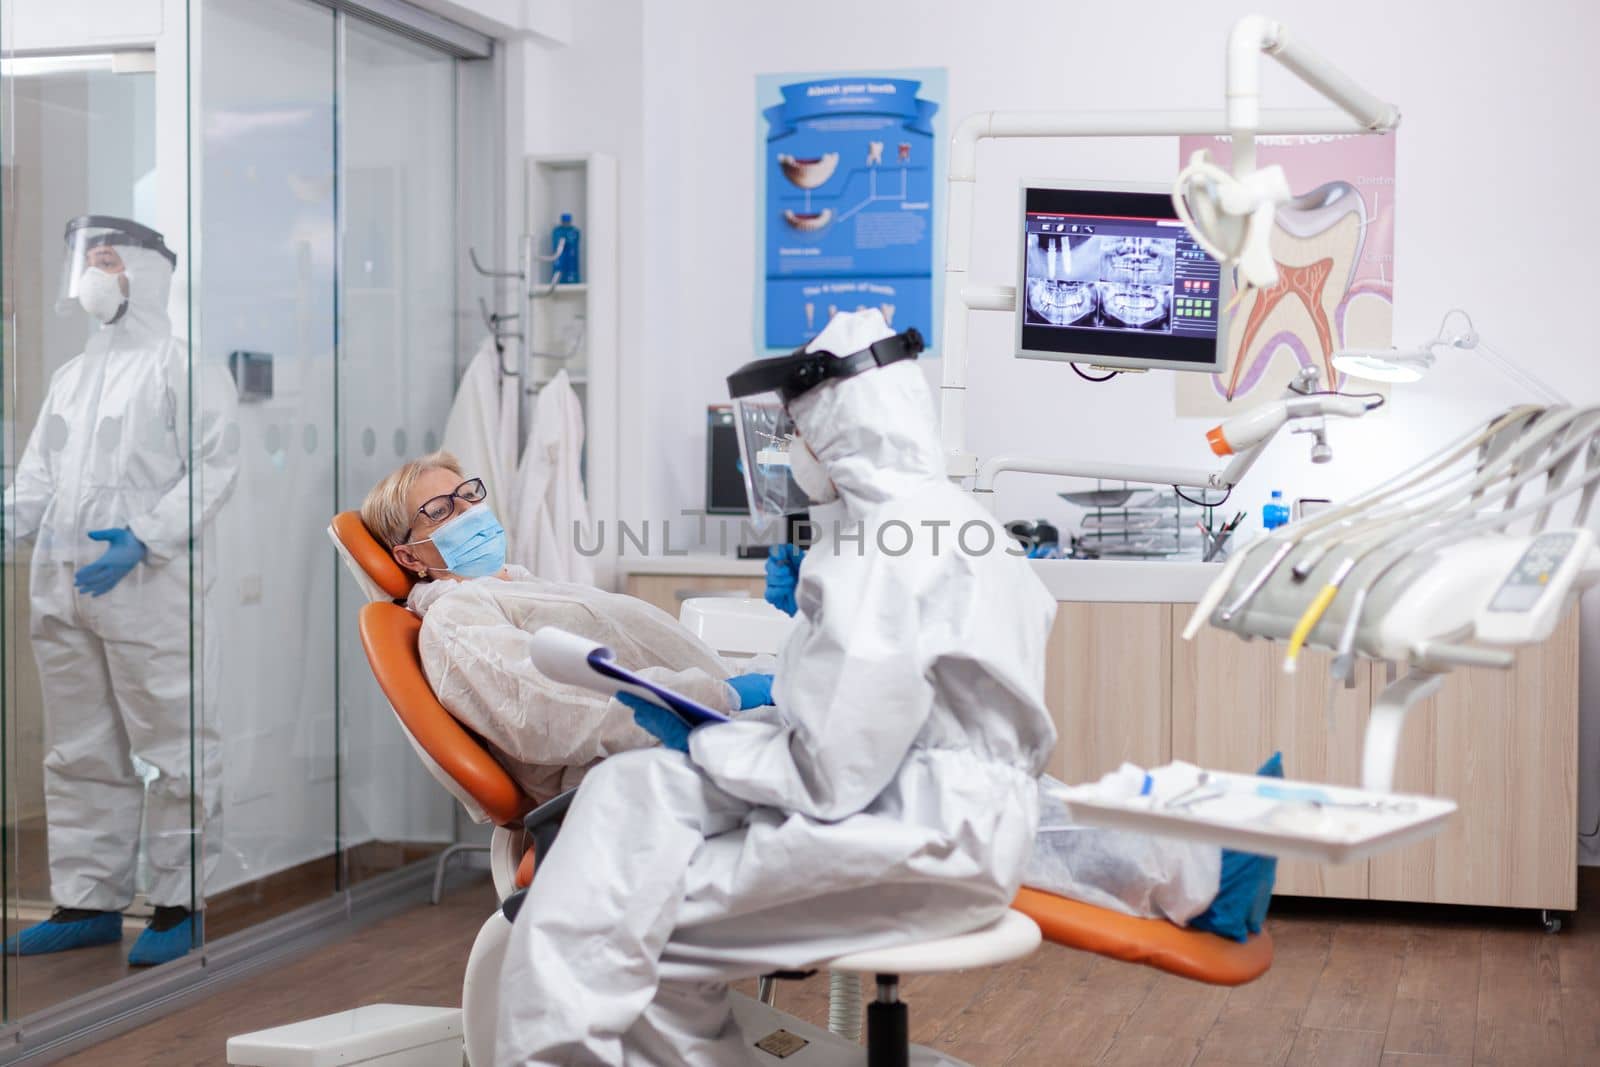 Dentist assitatnt questioning patient wearing protective equipment by DCStudio